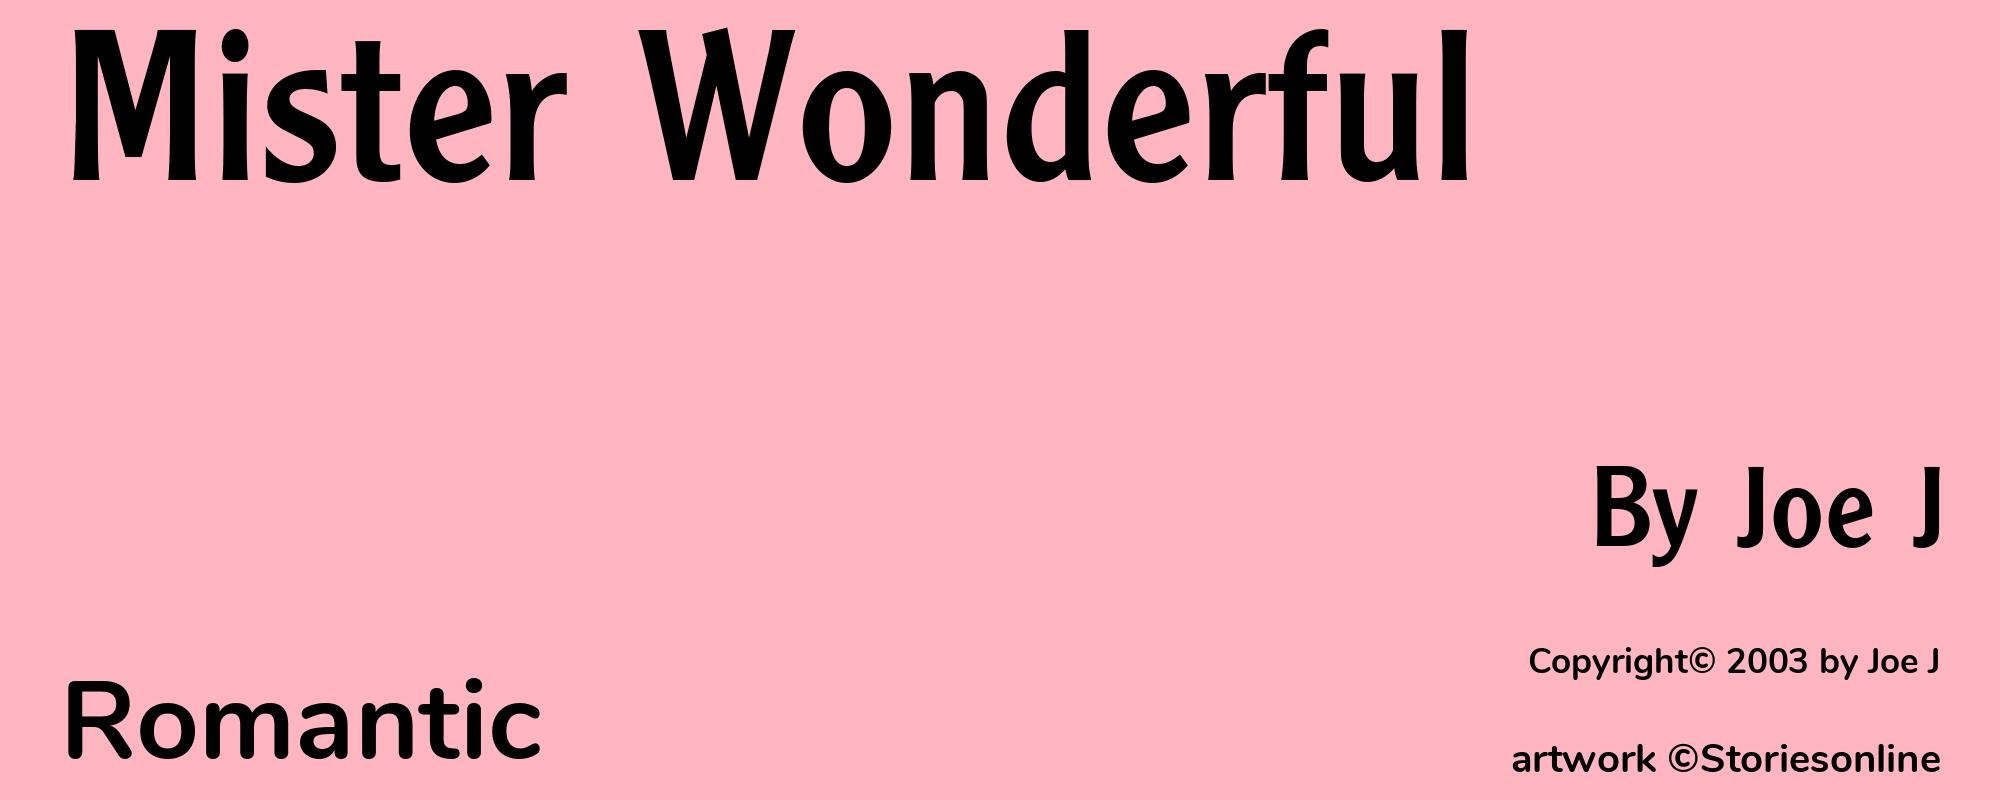 Mister Wonderful - Cover